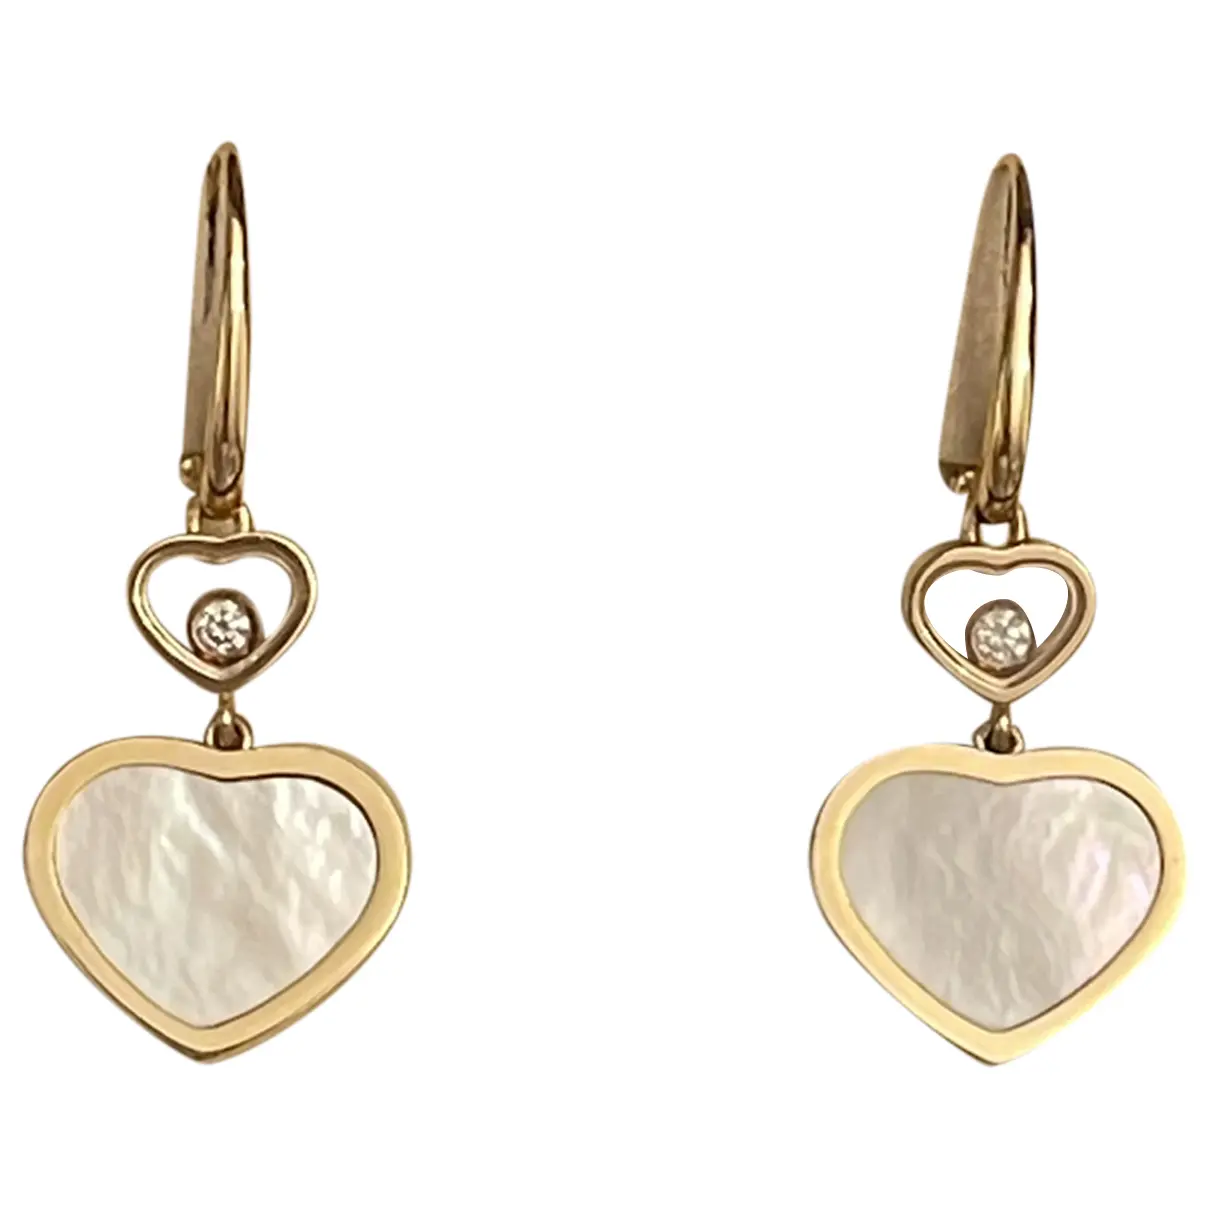 Happy Hearts pink gold earrings